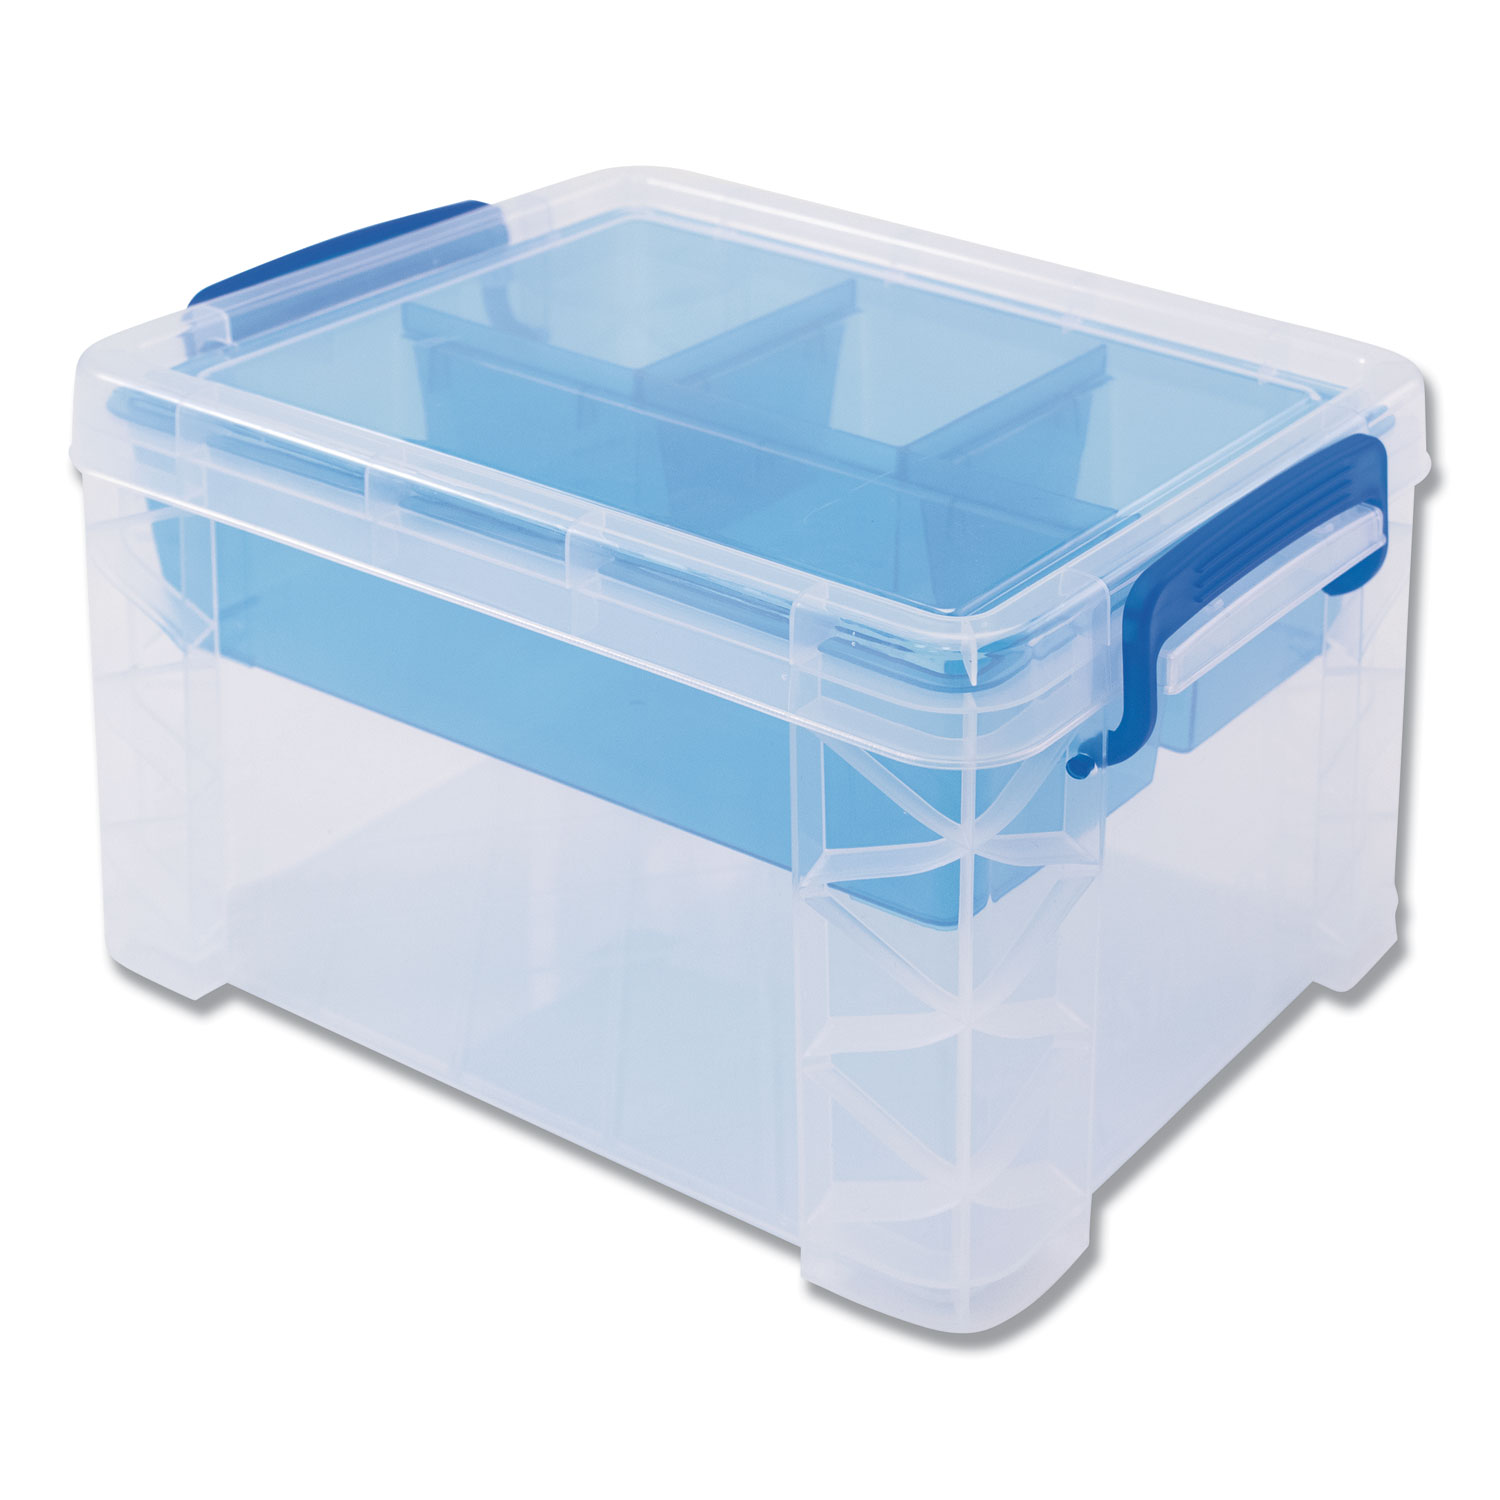  Advantus 37375 Super Stacker Divided Storage Box, Clear w/Blue Tray/Handles, 7 1/2 x 10.12x6.5 (AVT37375) 